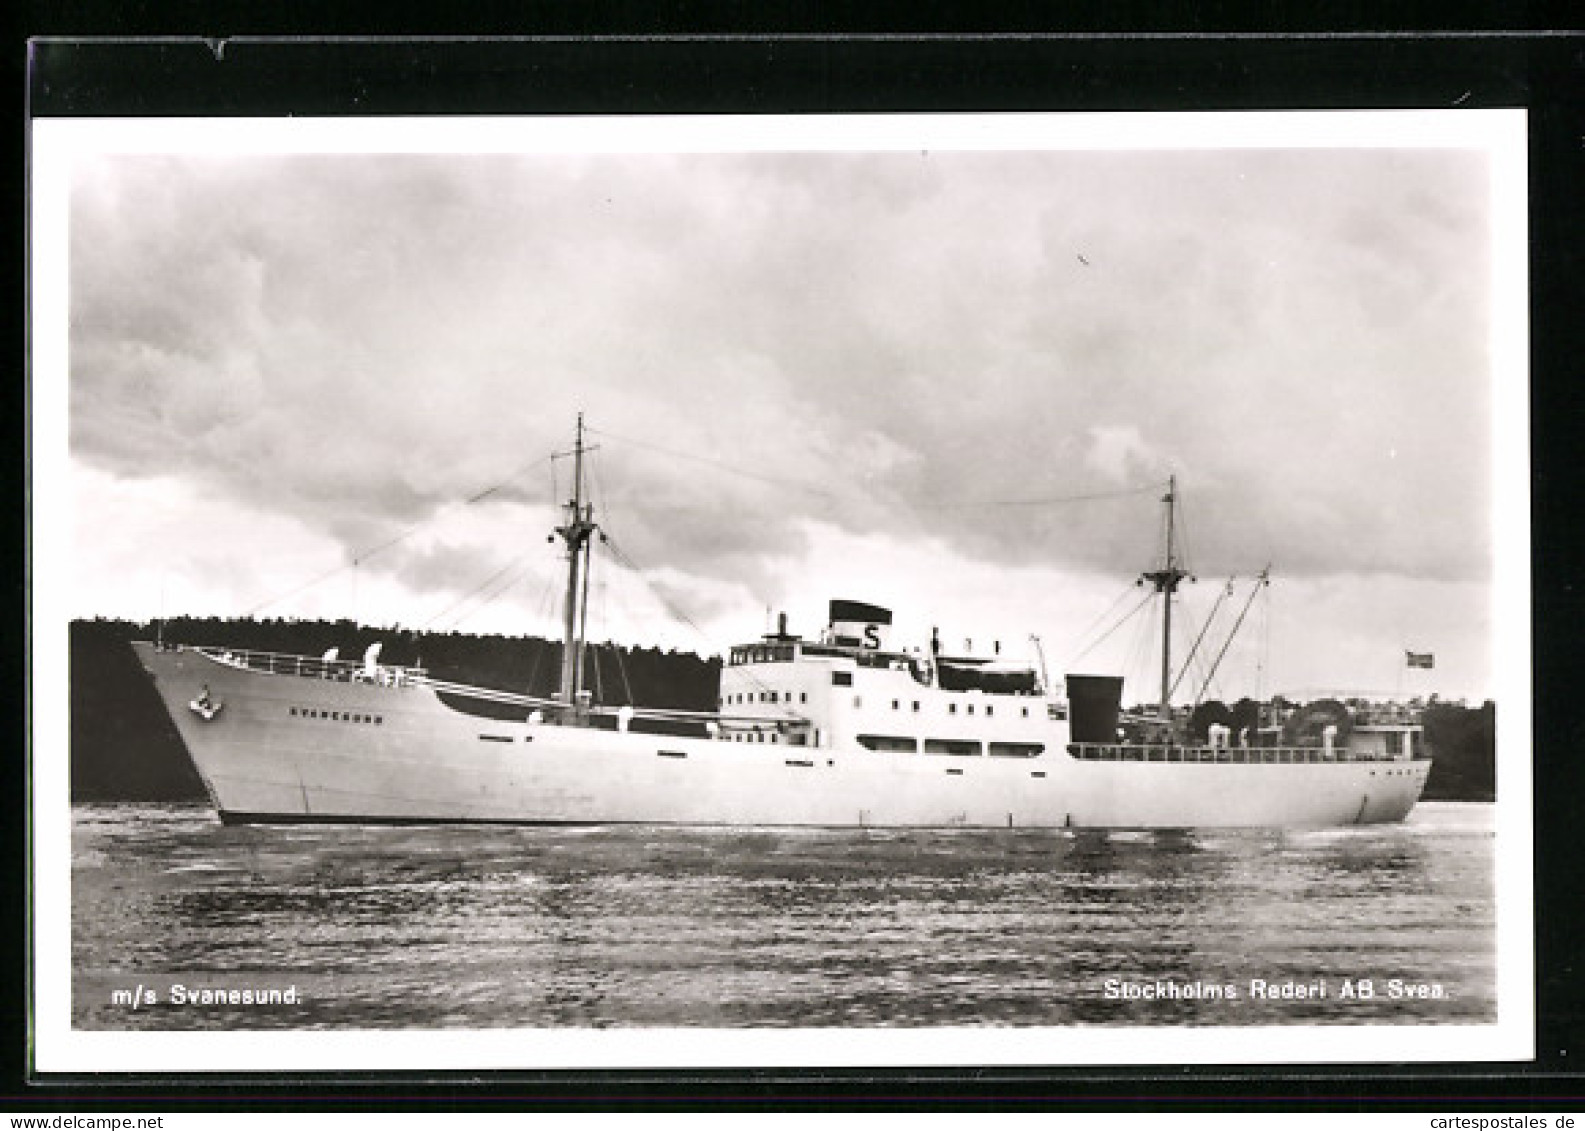 AK Handelsschiff MS Svandesund, Stockholms Rederi AB Svea  - Koopvaardij